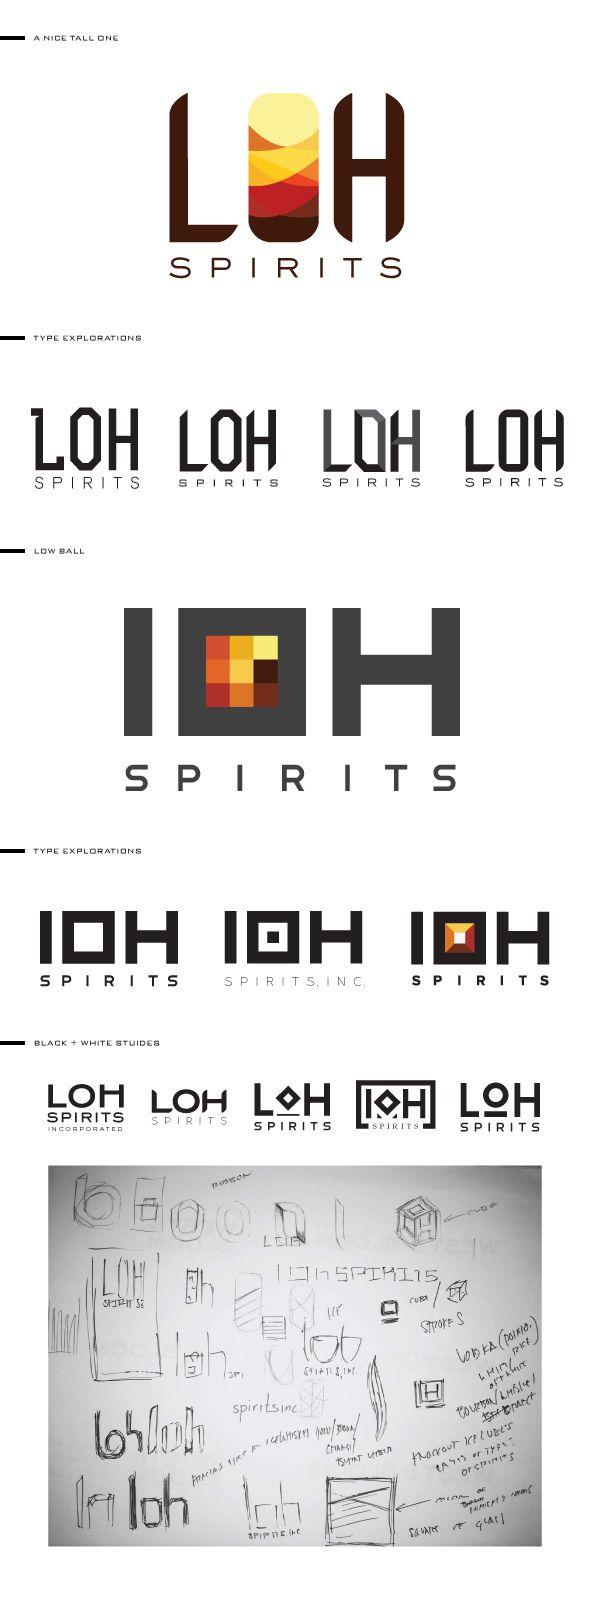 Alcohol Company Logo - loh SPIRITS | Alcohol Distribution Company Logo Design on Behance